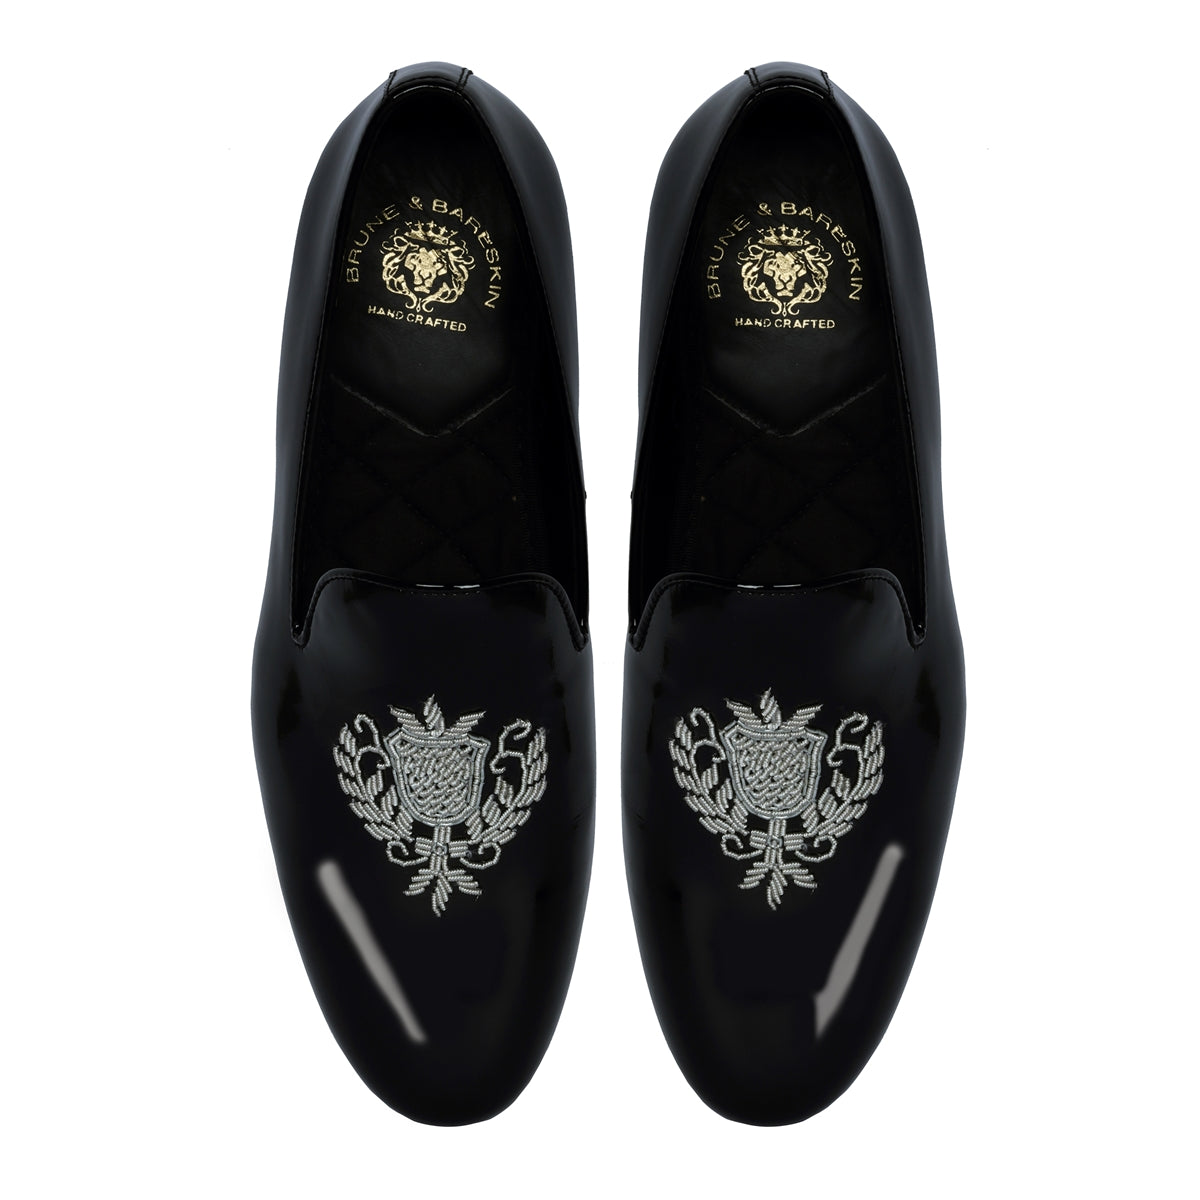 Black Patent Leather Slip-On Shoes Royal Crest Silver Zardosi For Men By Brune & Bareskin